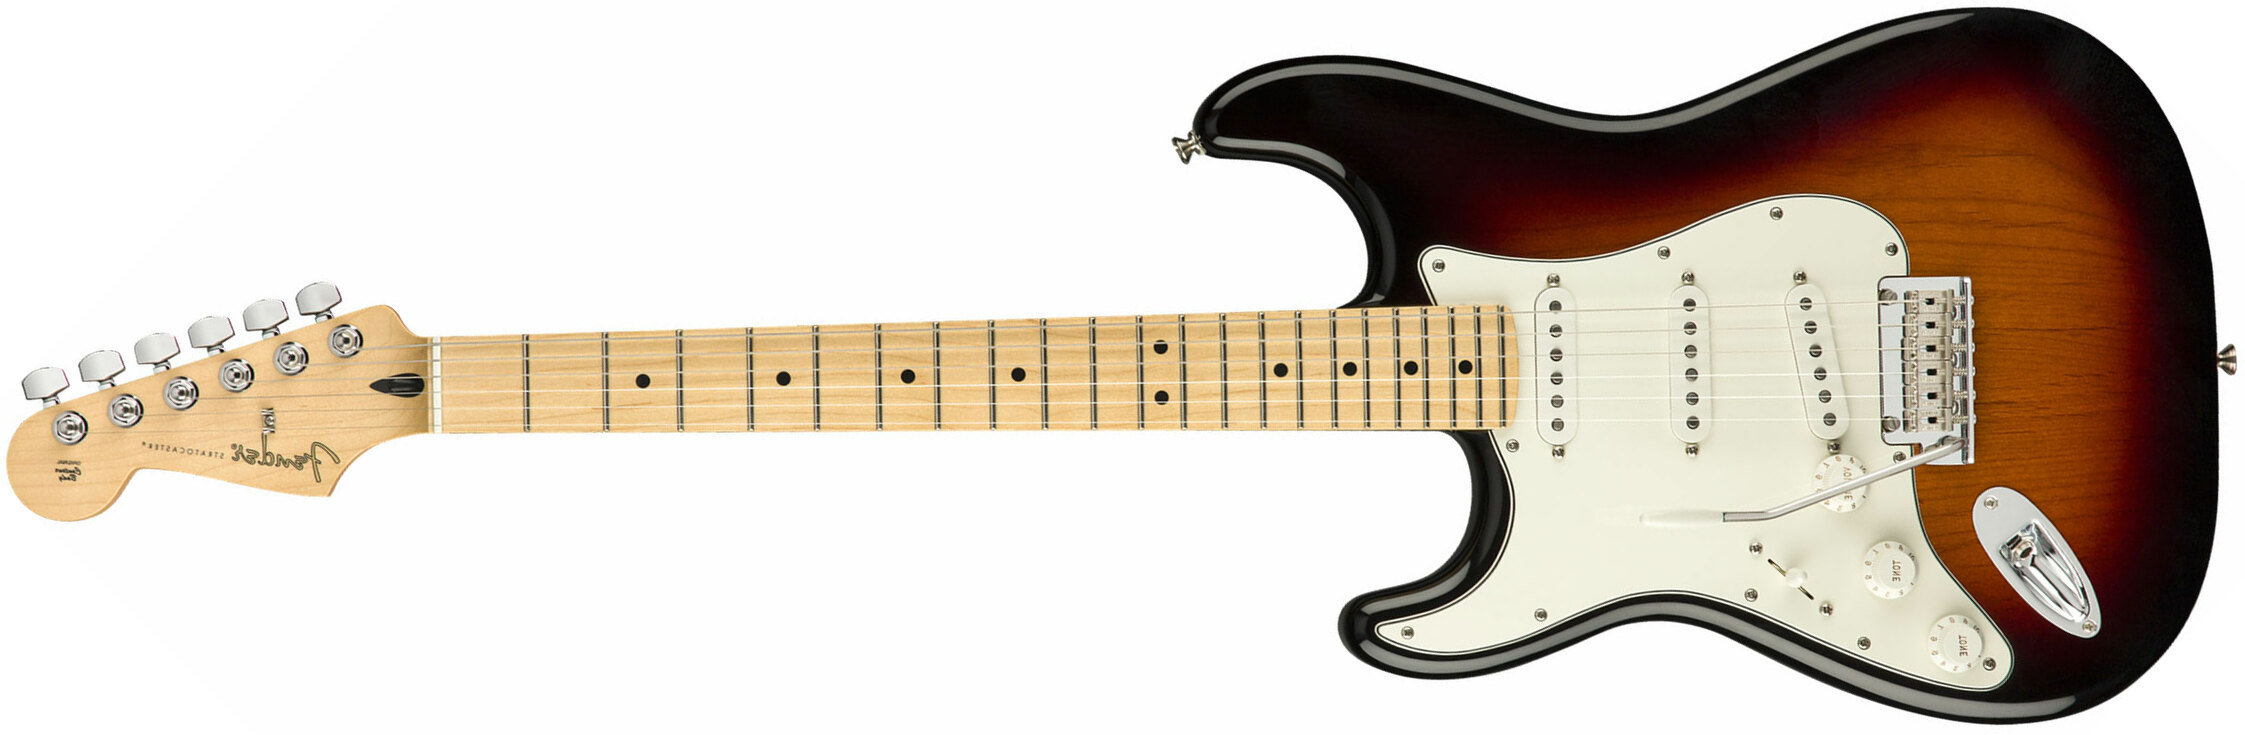 Fender Strat Player Lh Gaucher Mex Sss Mn - 3-color Sunburst - Left-handed electric guitar - Main picture